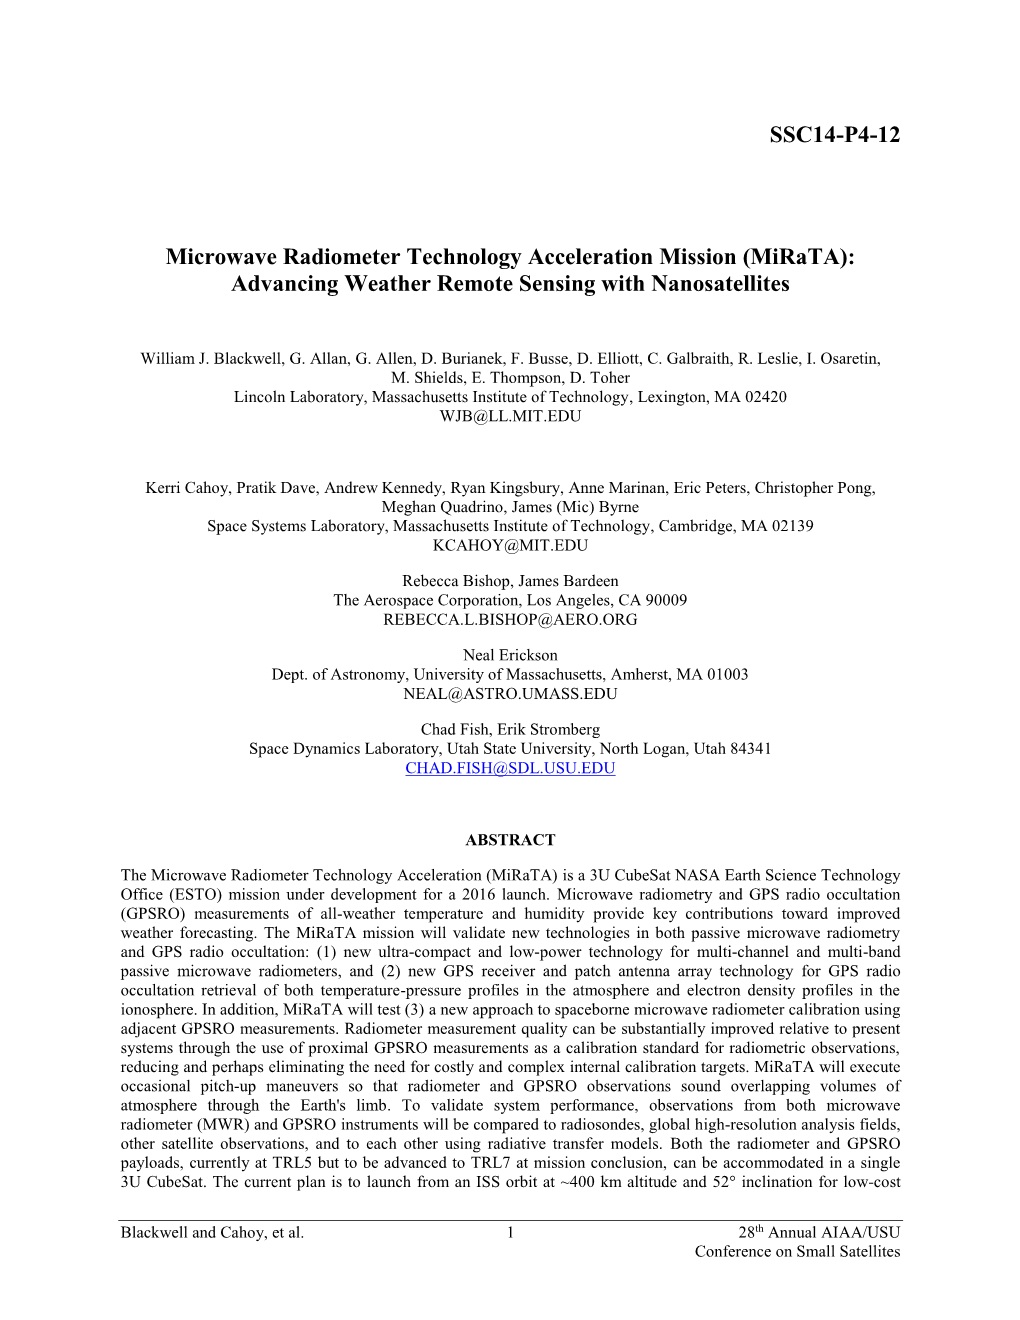 Microwave Radiometer Technology Acceleration Mission (Mirata): Advancing Weather Remote Sensing with Nanosatellites